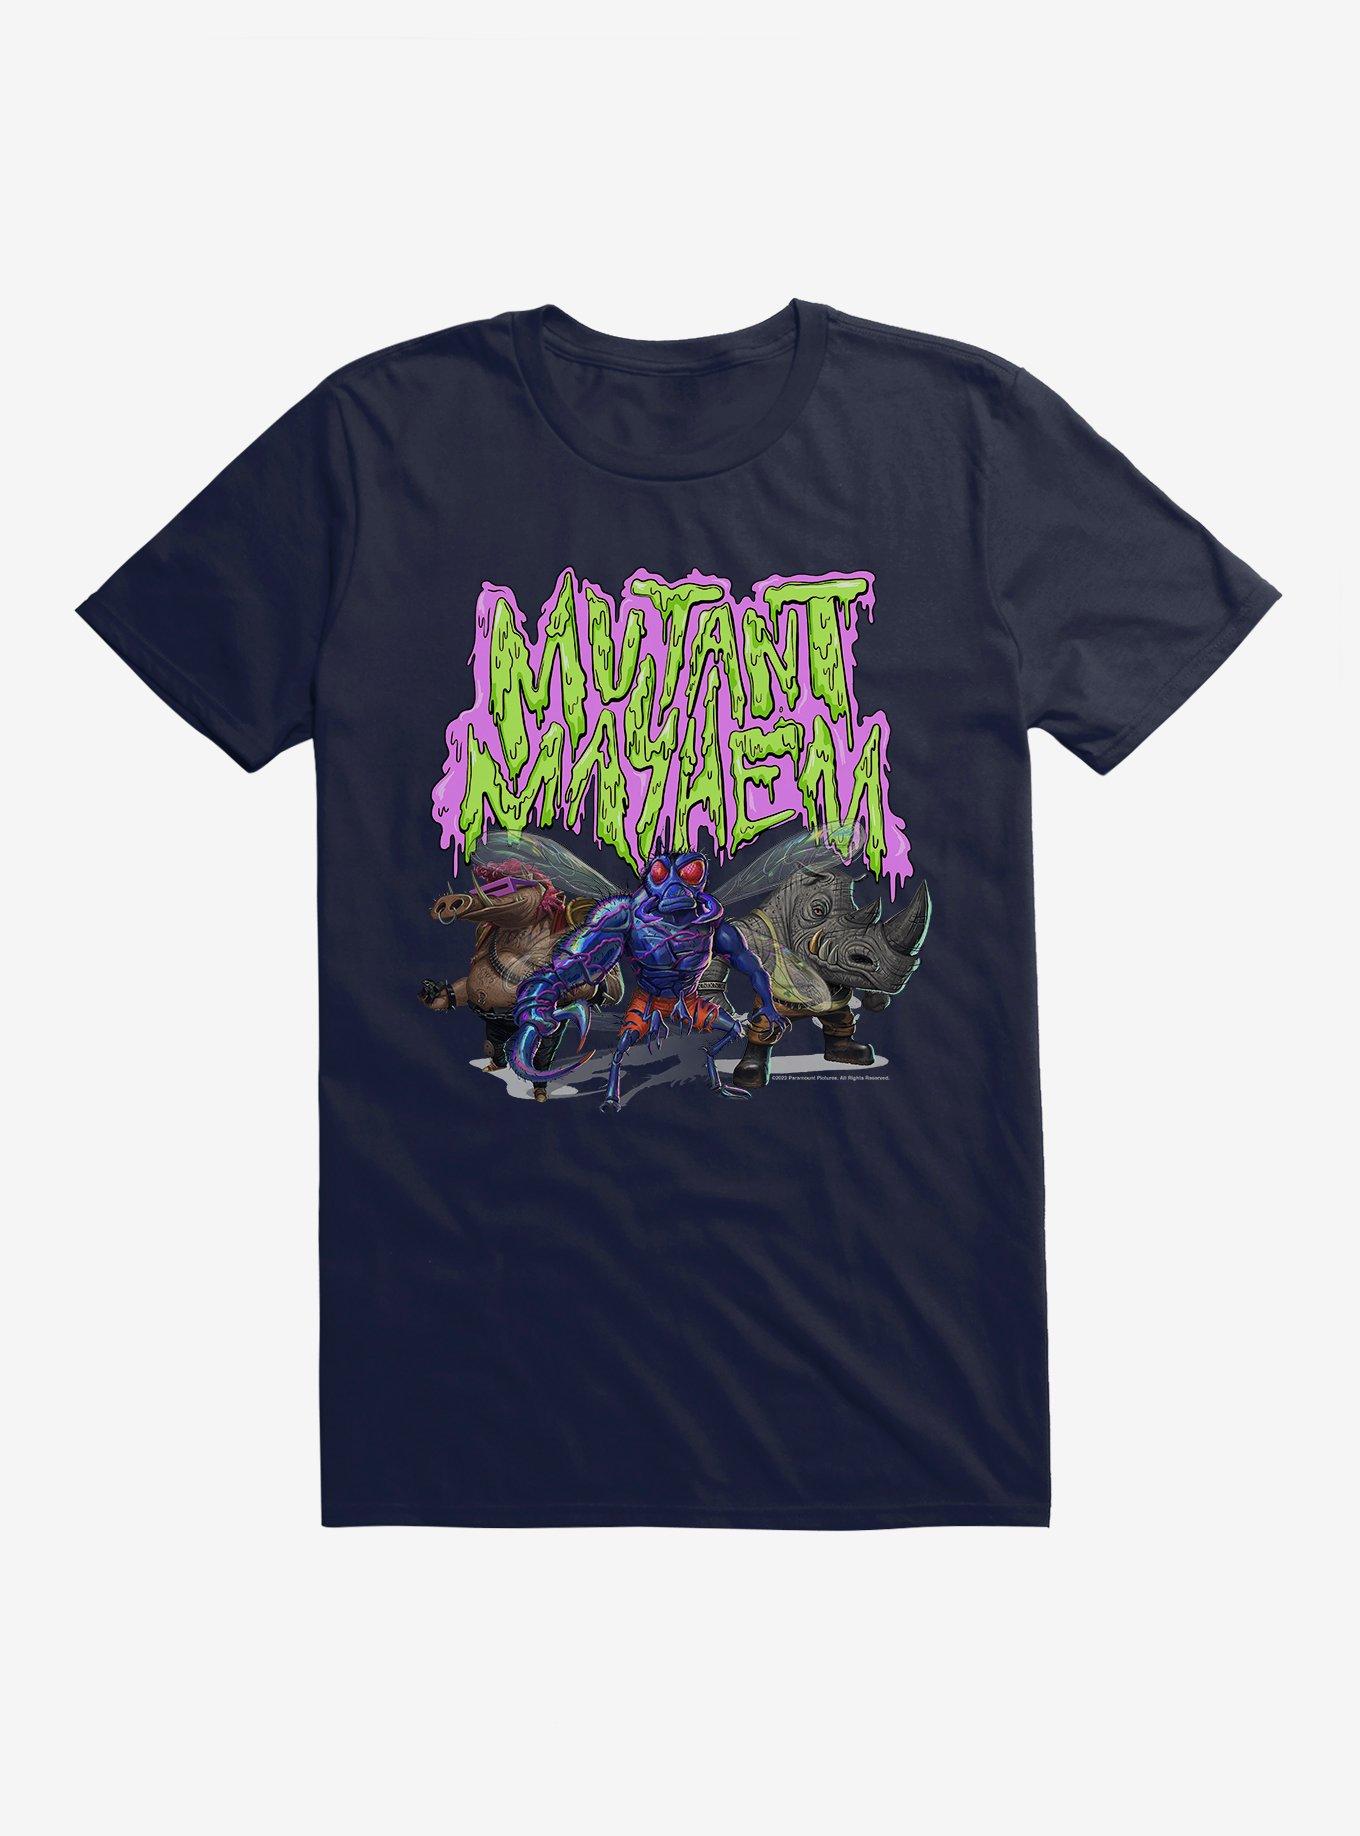 Teenage Mutant Ninja Turtles: Mayhem Villains Slime Logo T-Shirt